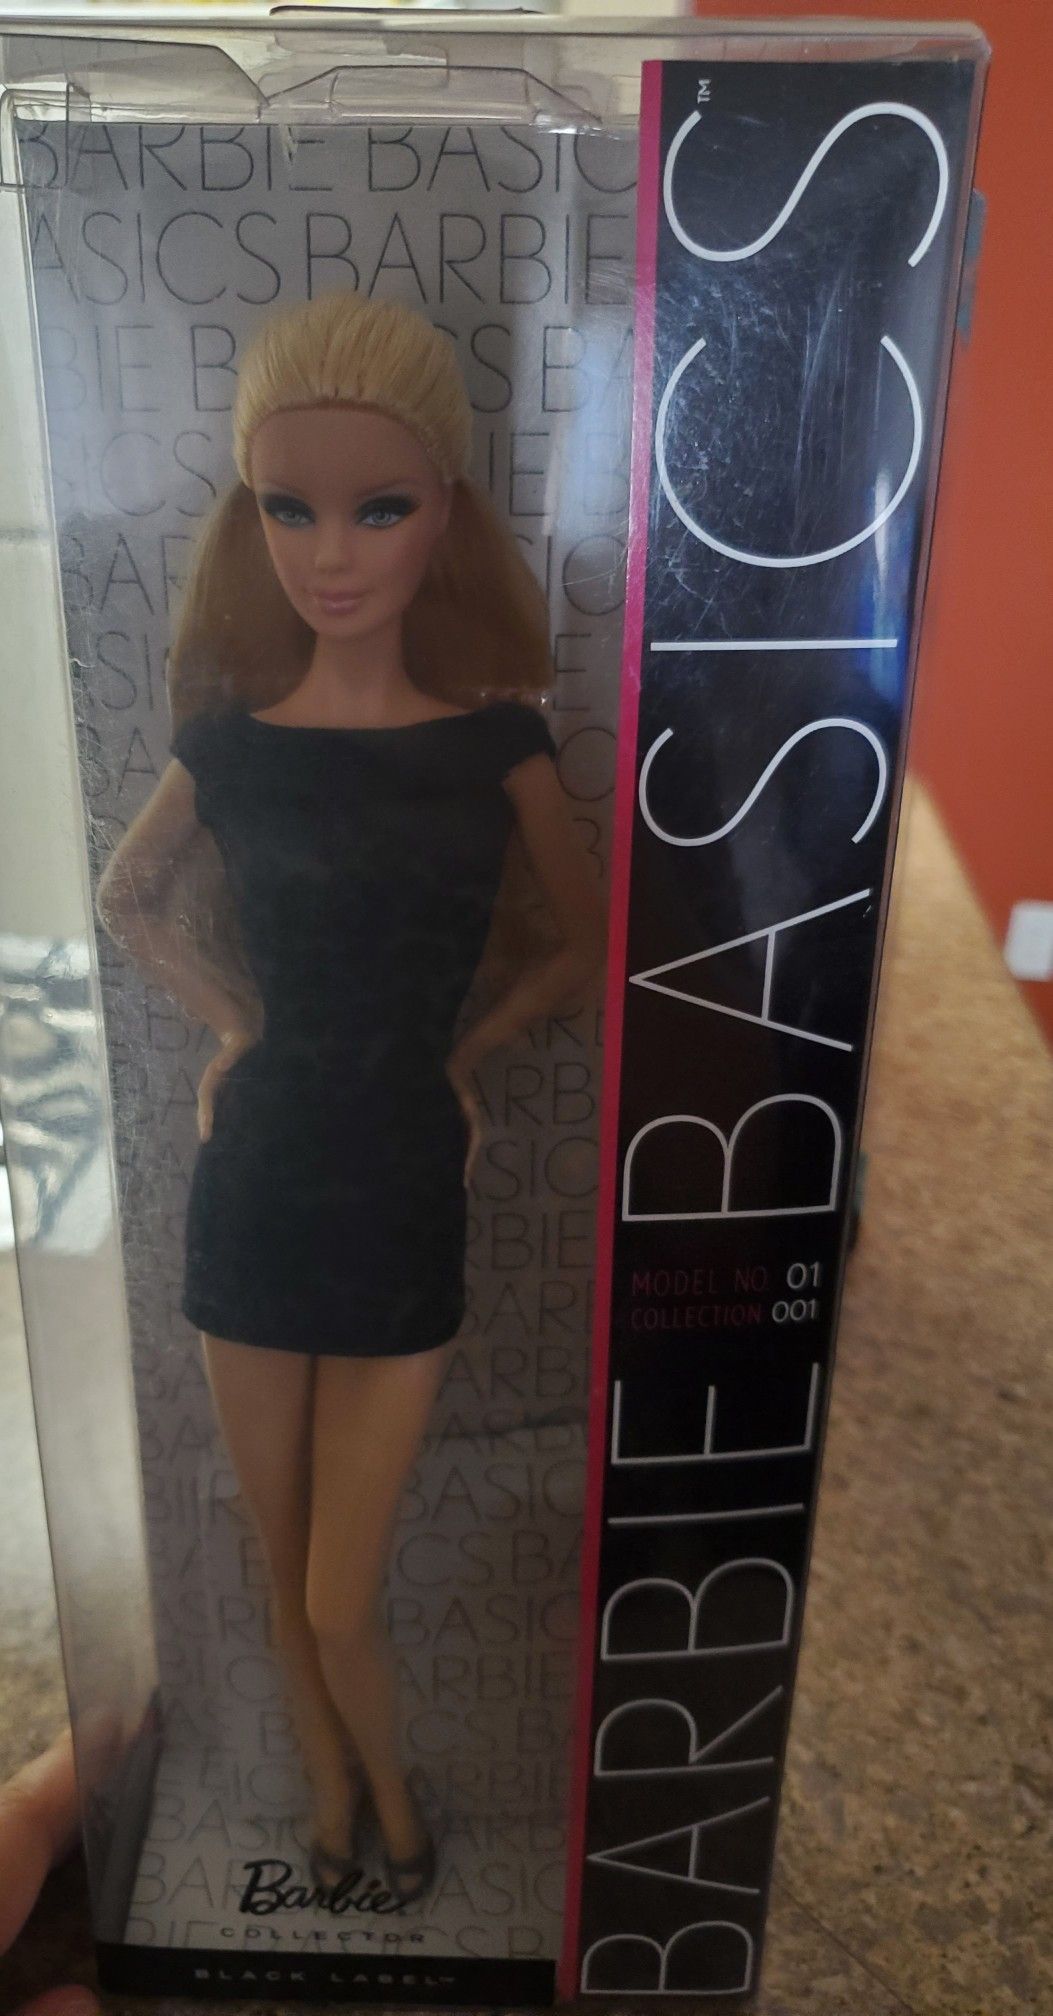 Barbie basic